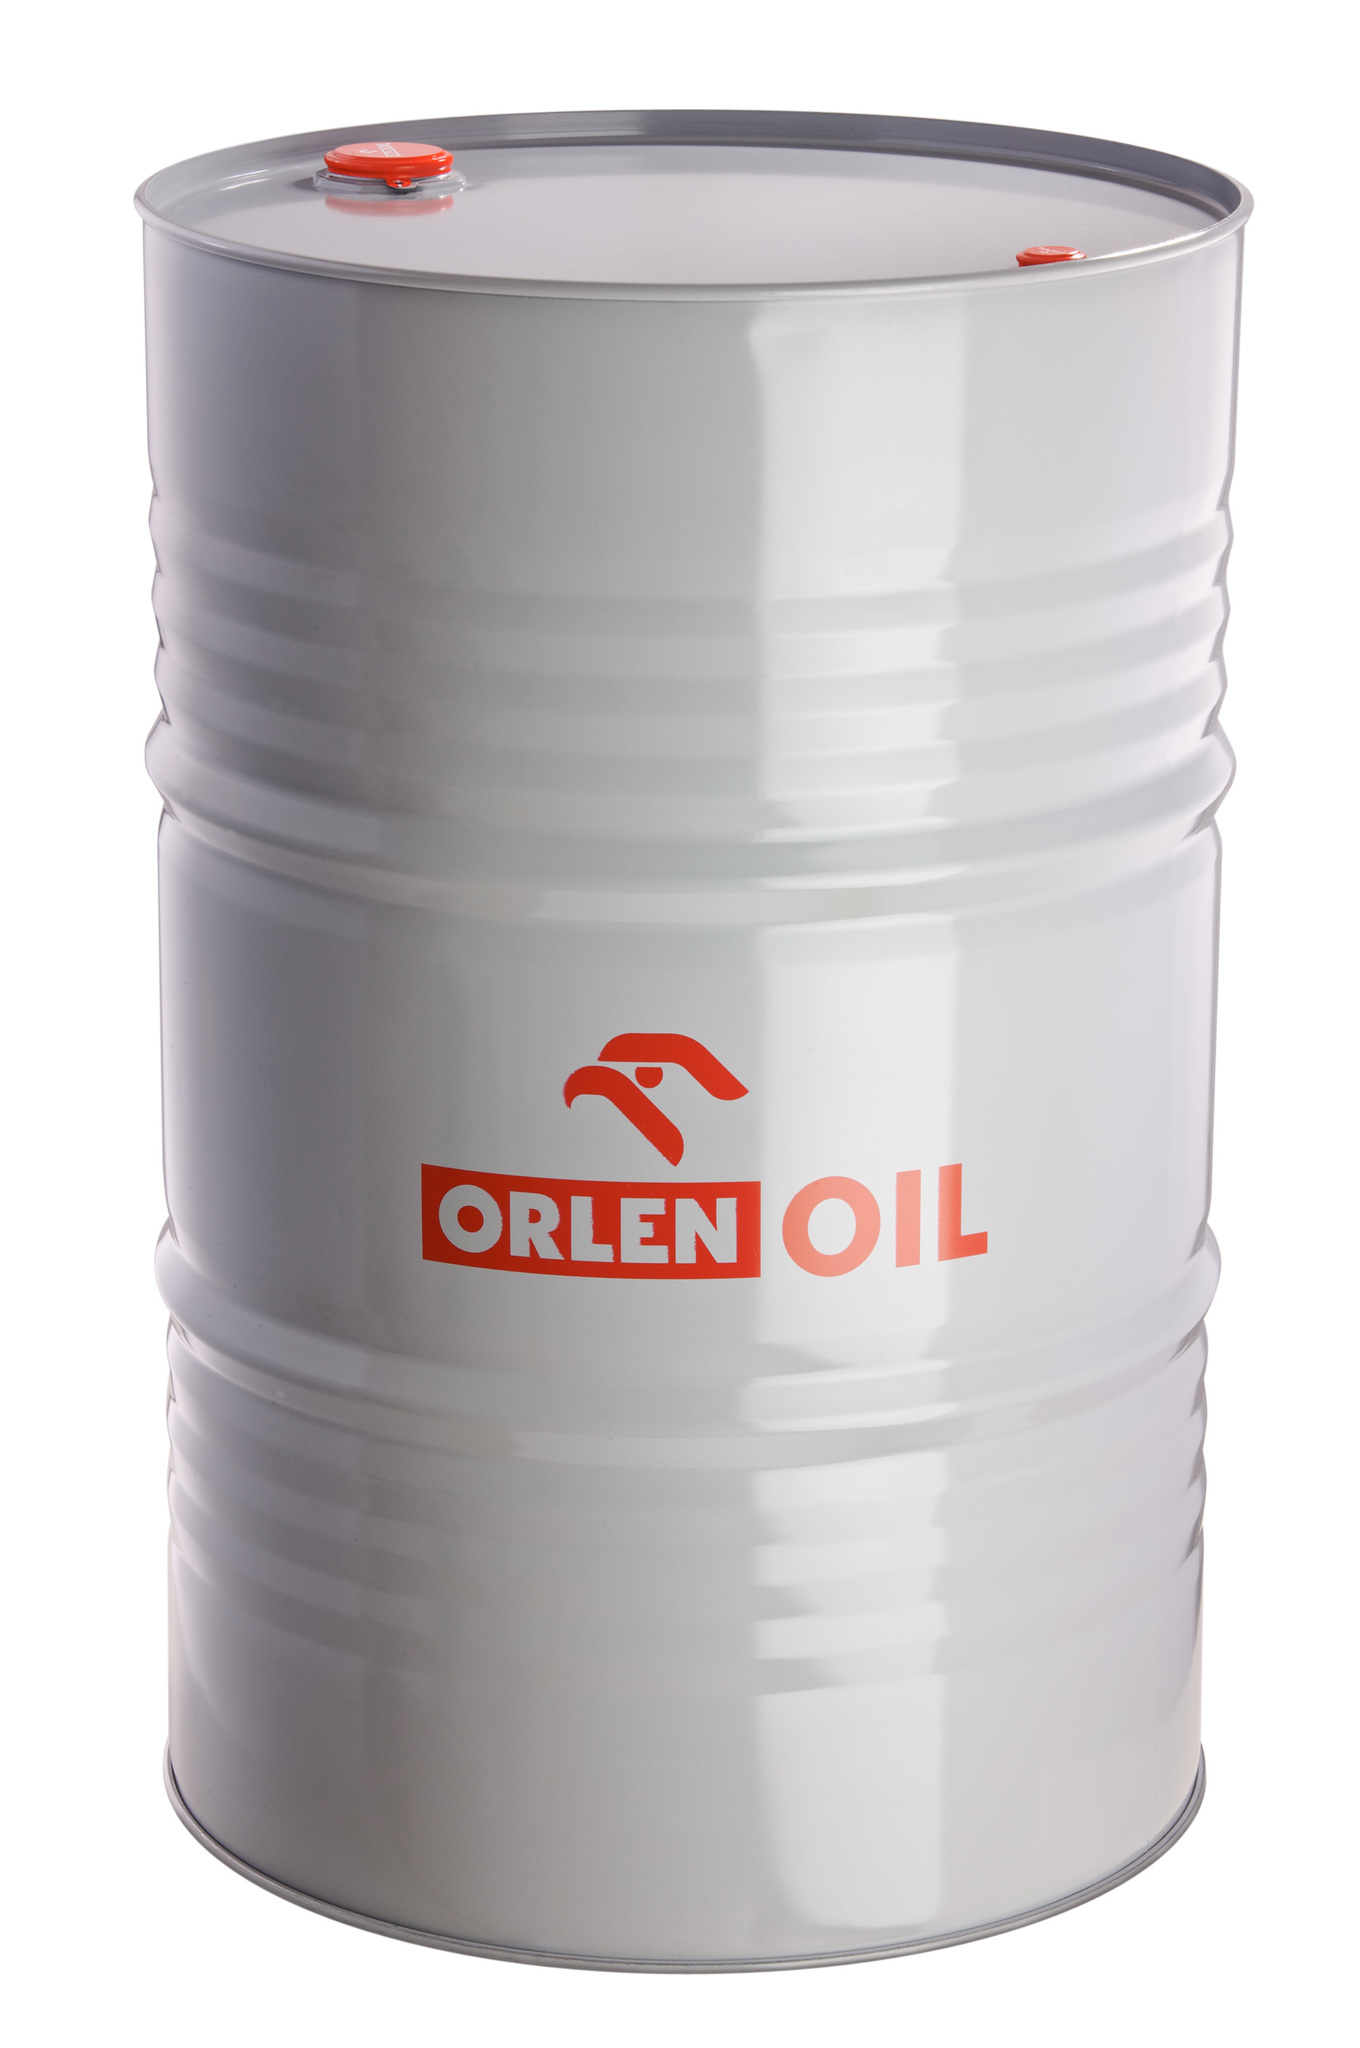 OrlenOil Hydrol L-HV 46 Гидравлическое масло